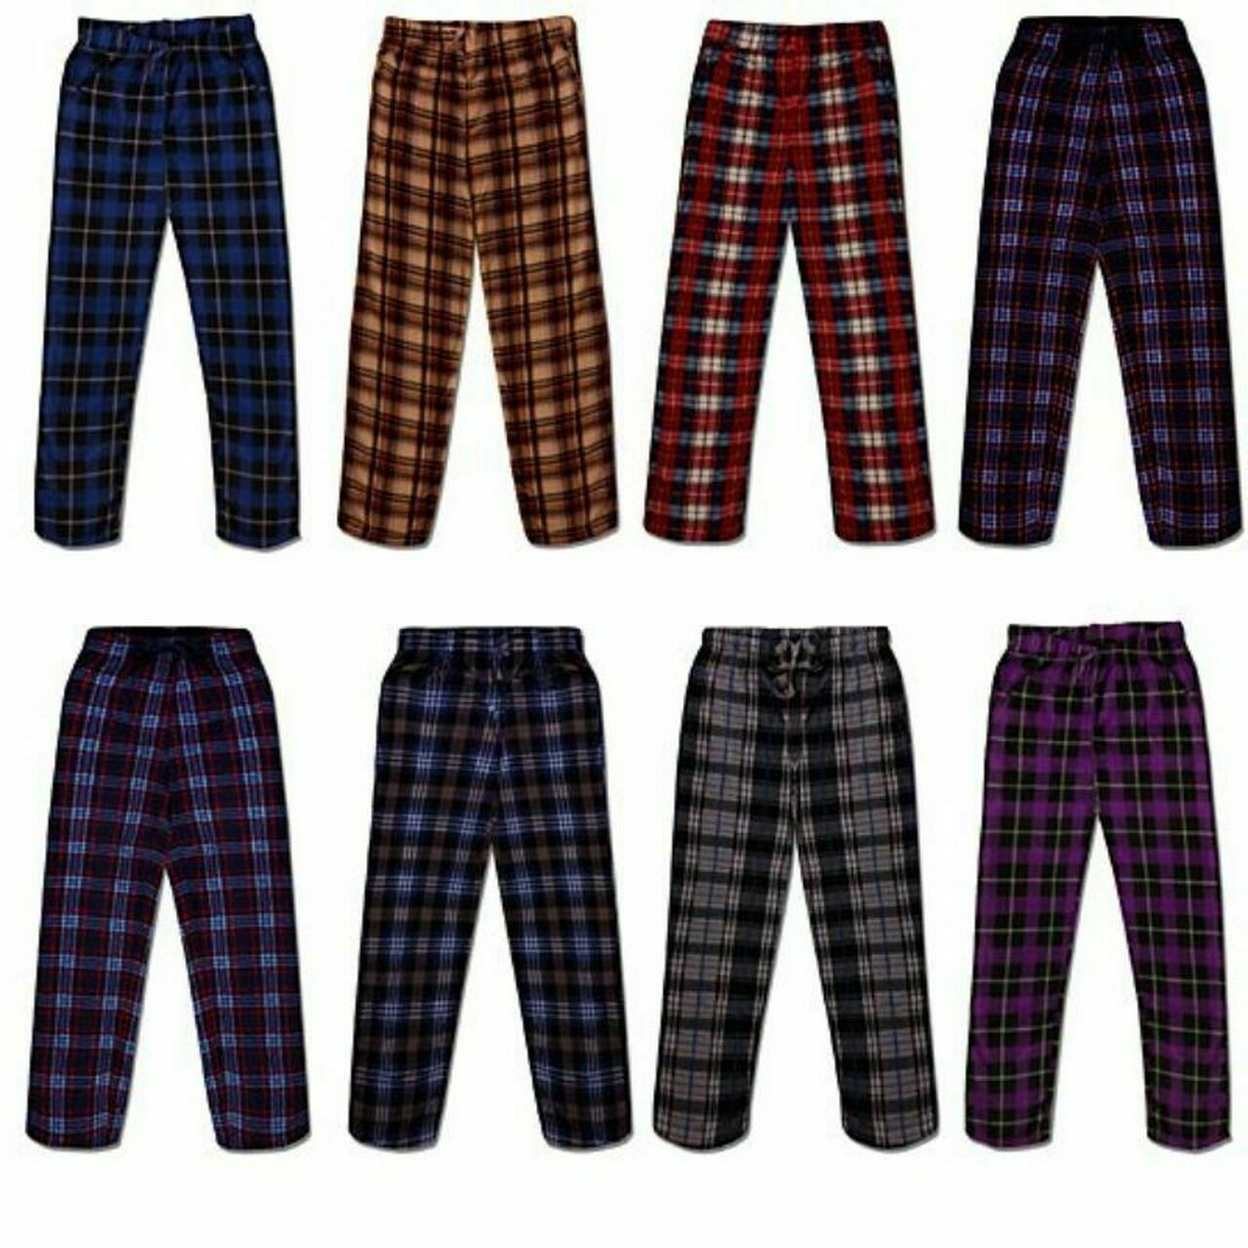 4-Pack: Men's Ultra Soft Cozy Flannel Fleece Plaid Pajama Sleep Bottom Lounge Pants - Medium